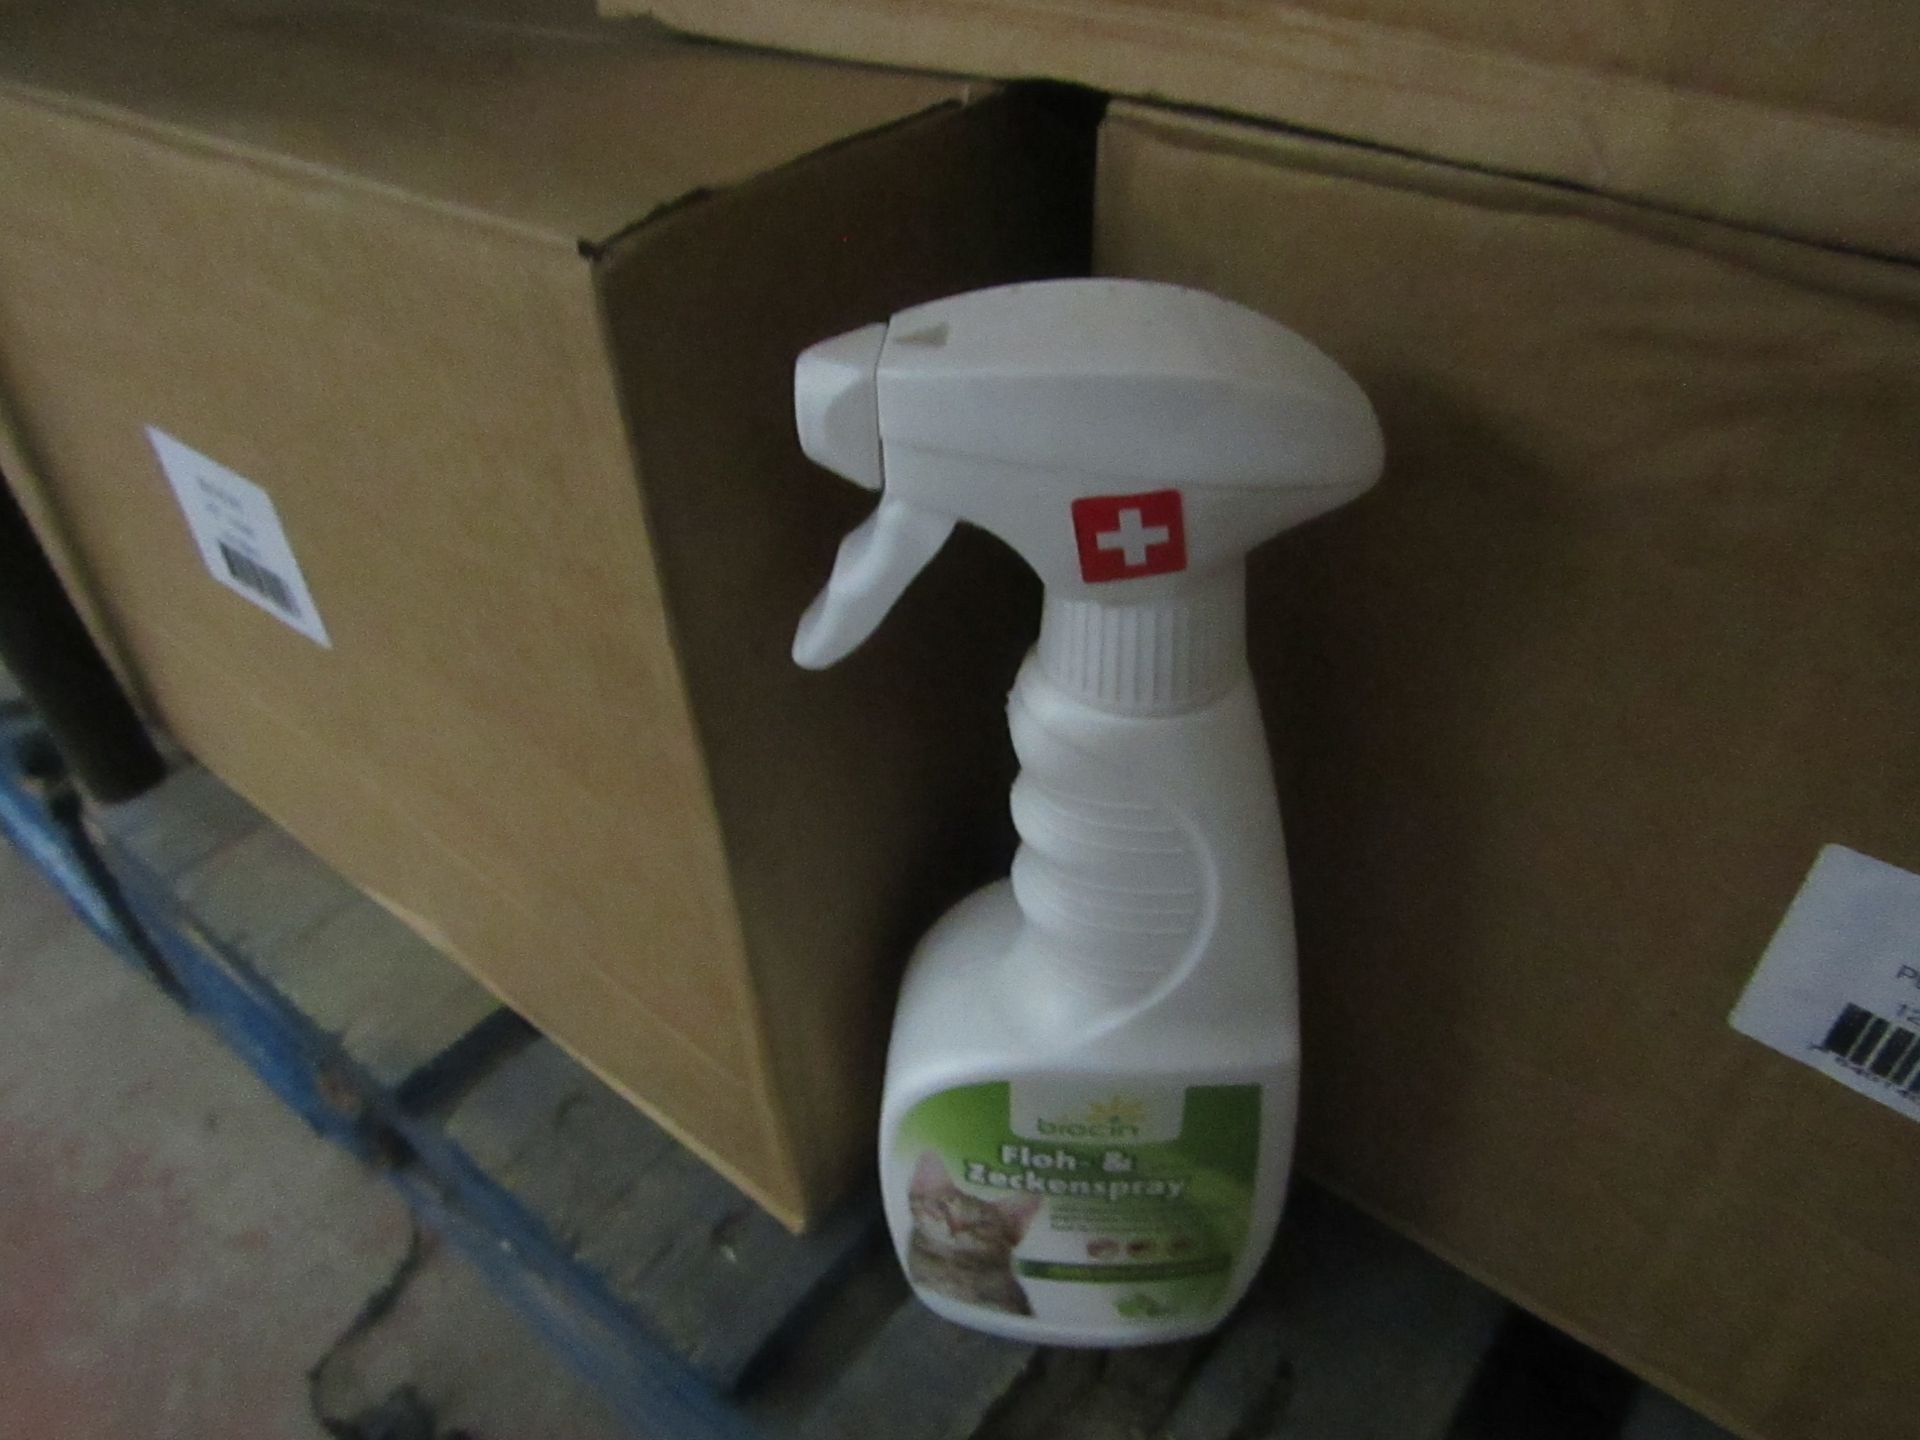 24 x 350ml Flea Spray. Instructions are in German.